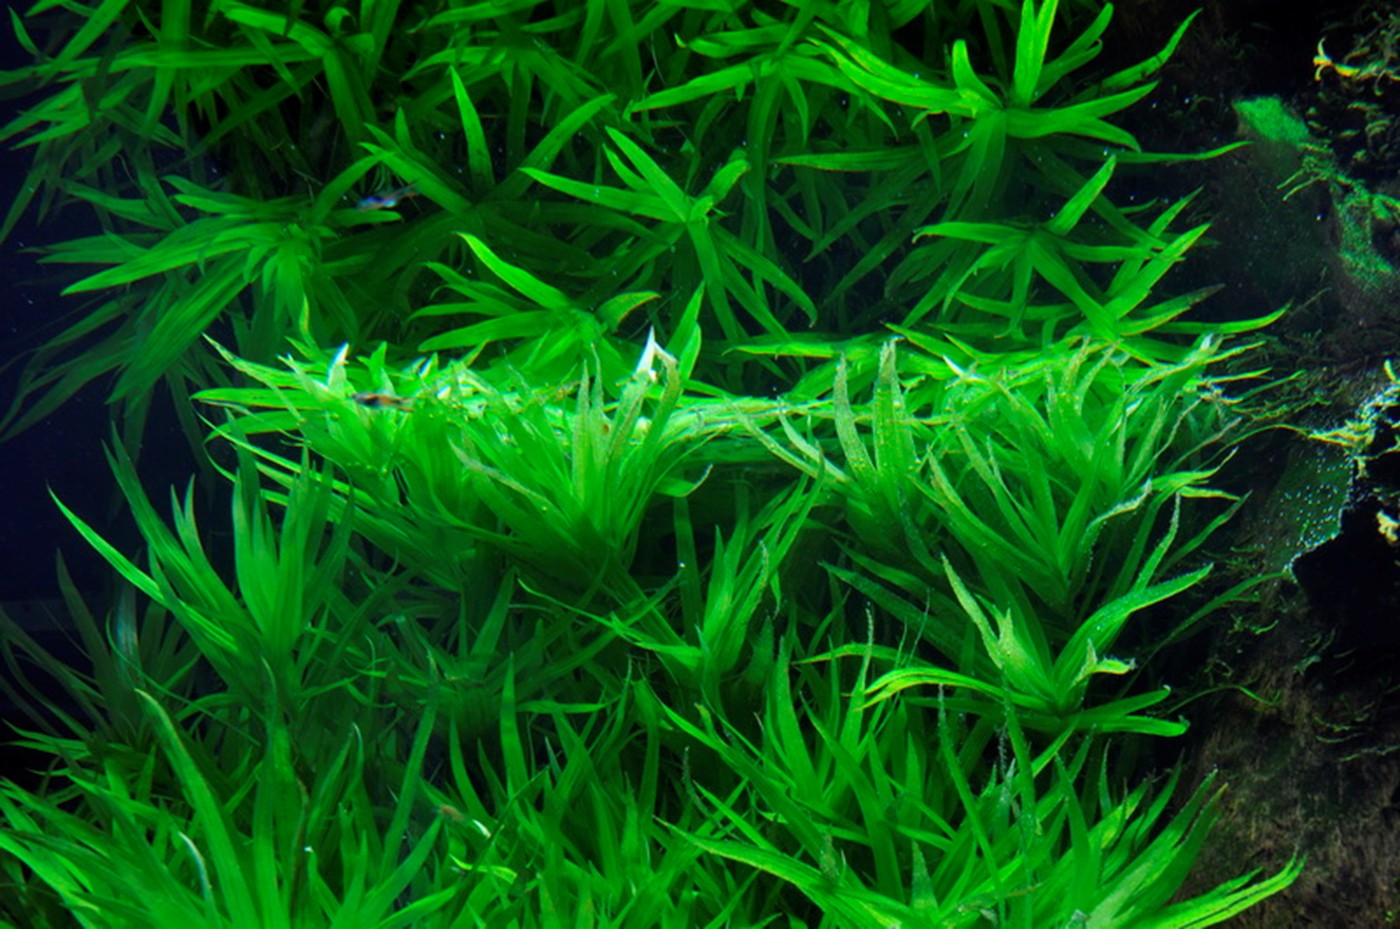 Heteranthera zosterfolia (Water Hedge/Star Grass)